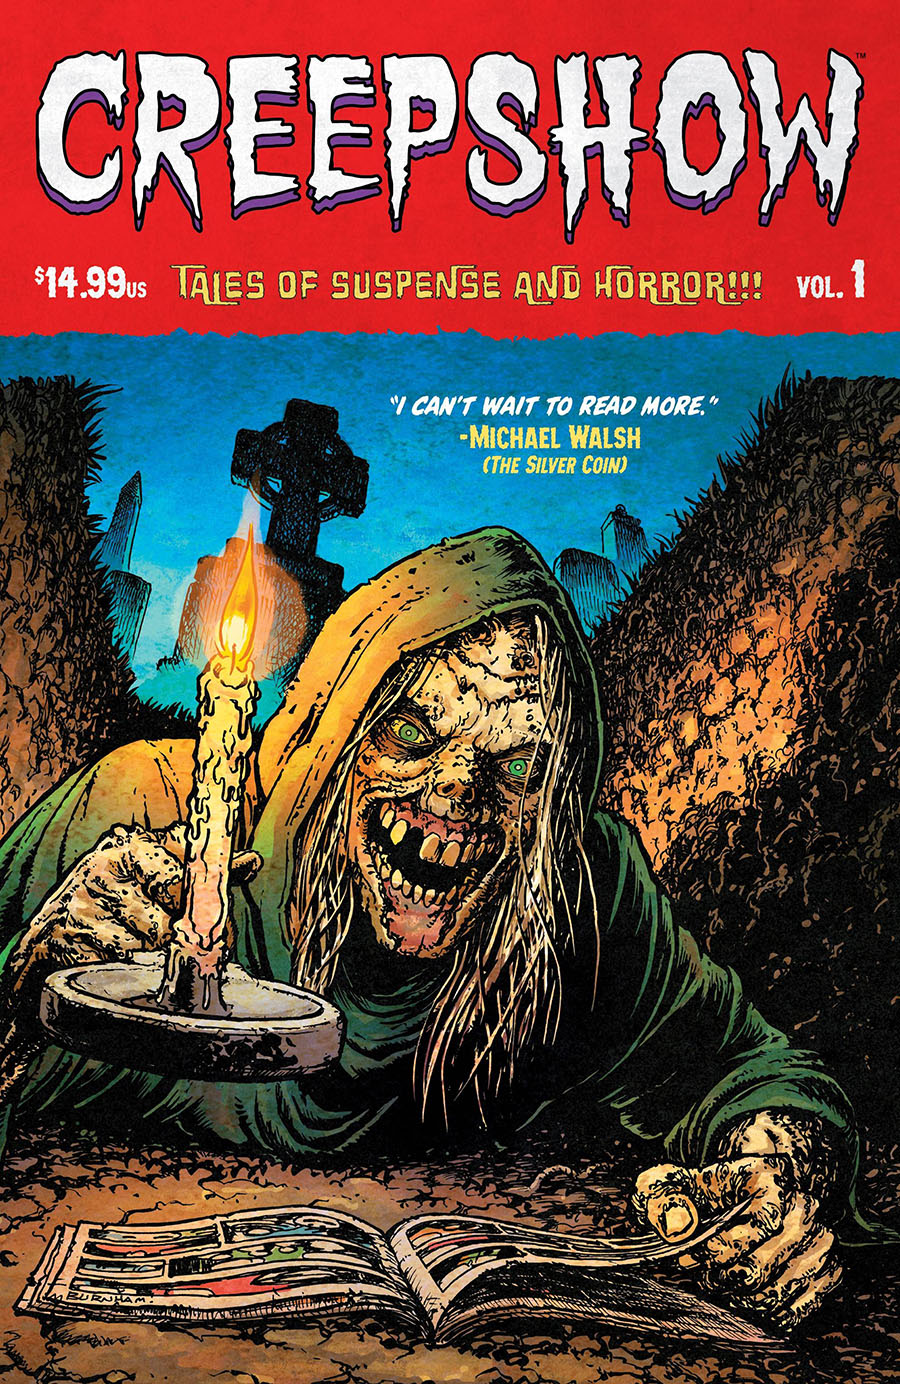 Creepshow Tales Of Suspense And Horror Vol 1 TP